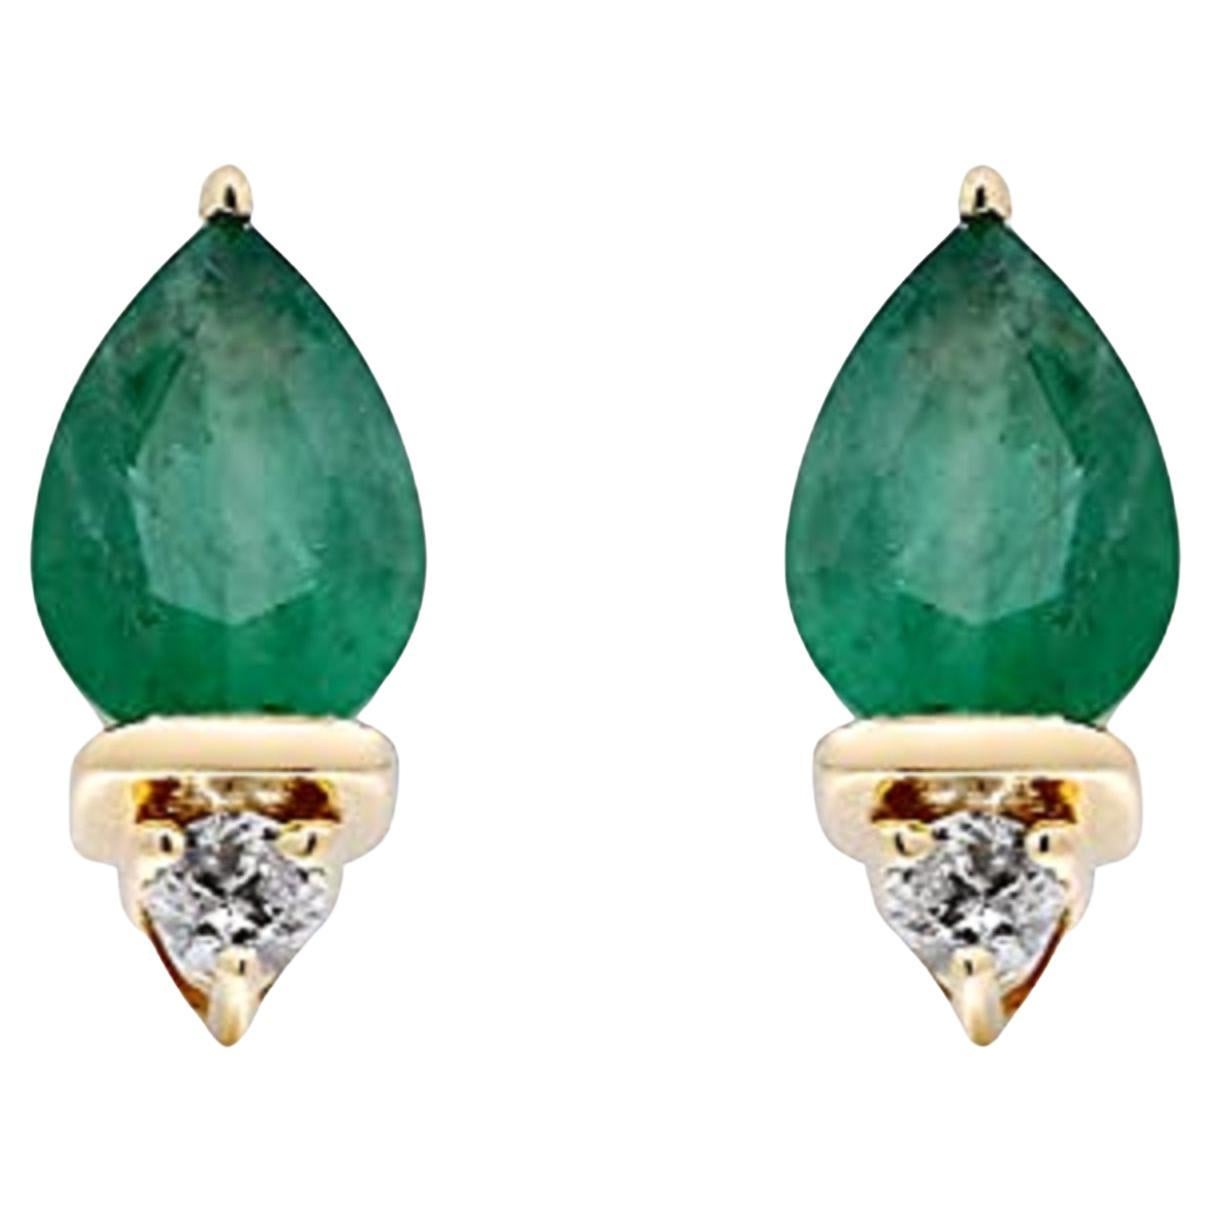 Gin & Grace 10K Yellow Gold Natural Zambian Emerald Stud Earrings with Diamonds